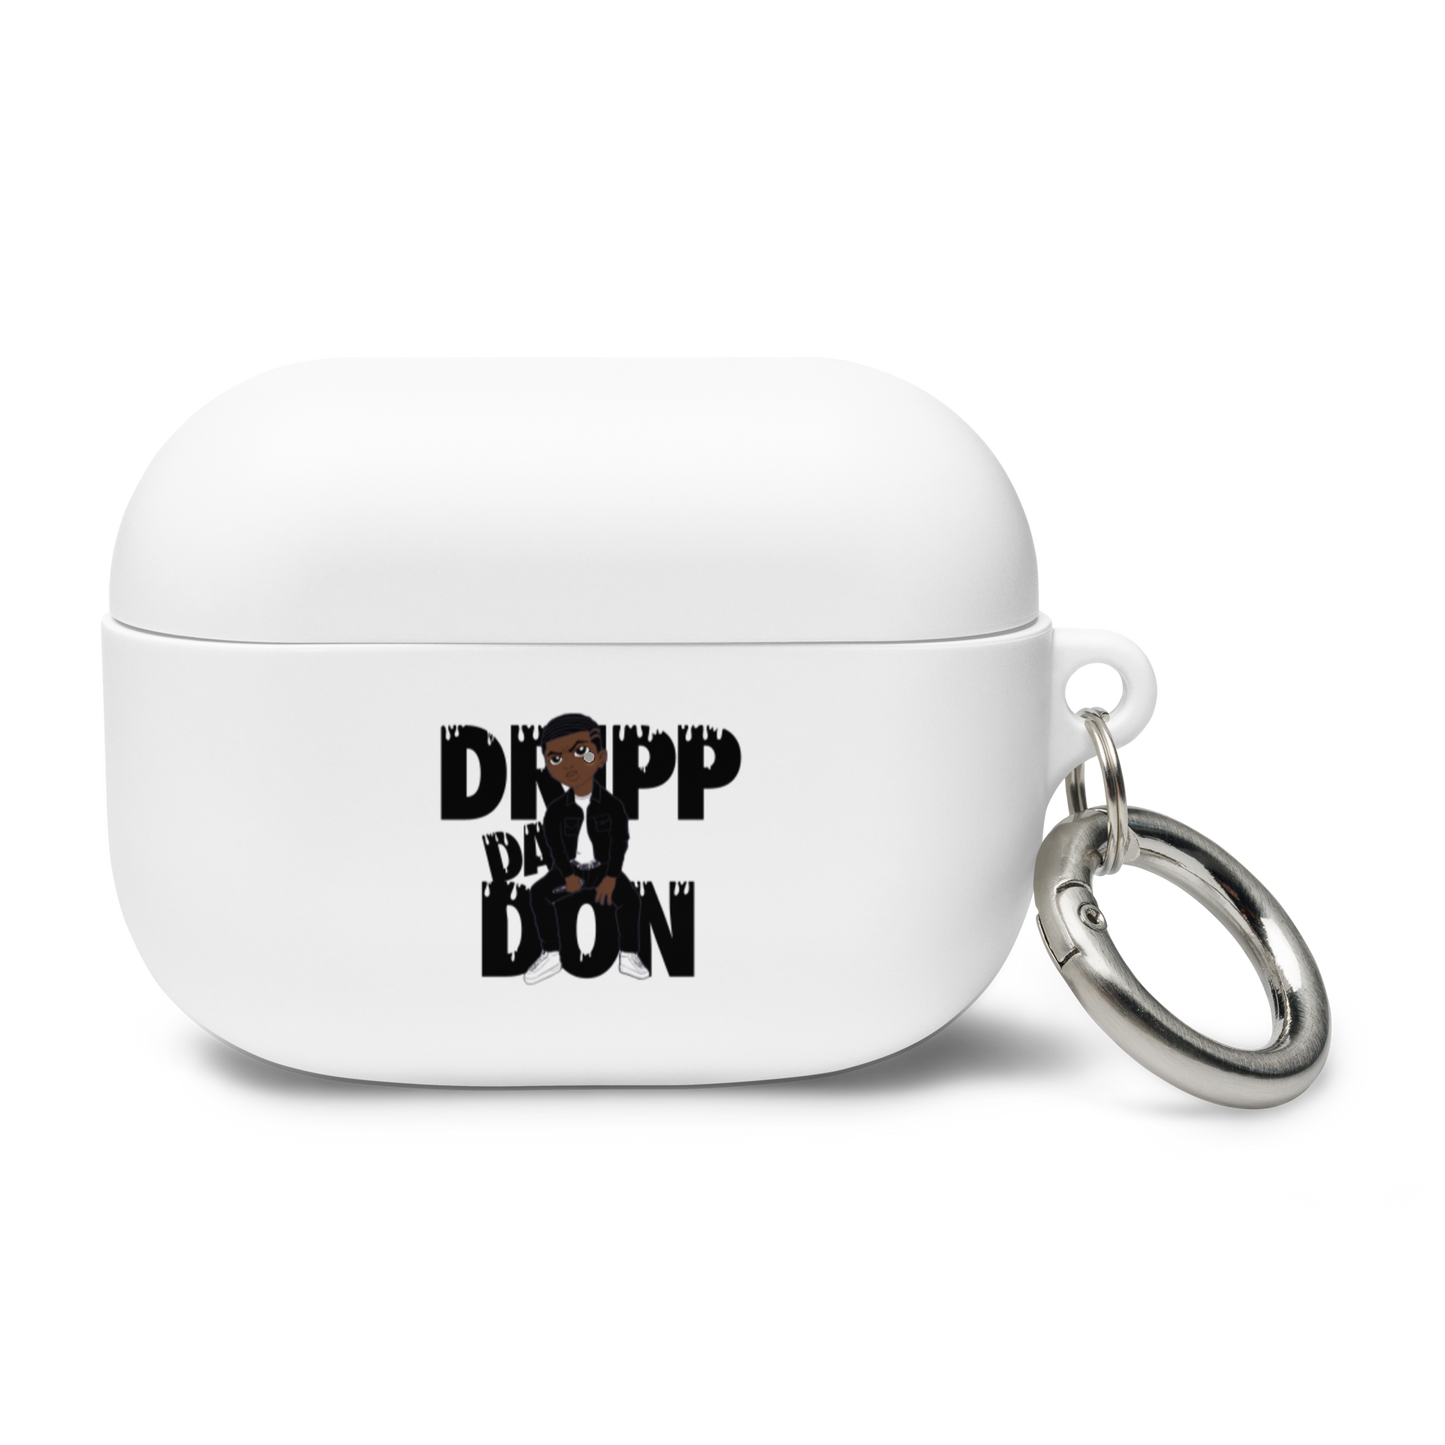 Dripp's Original AirPods case